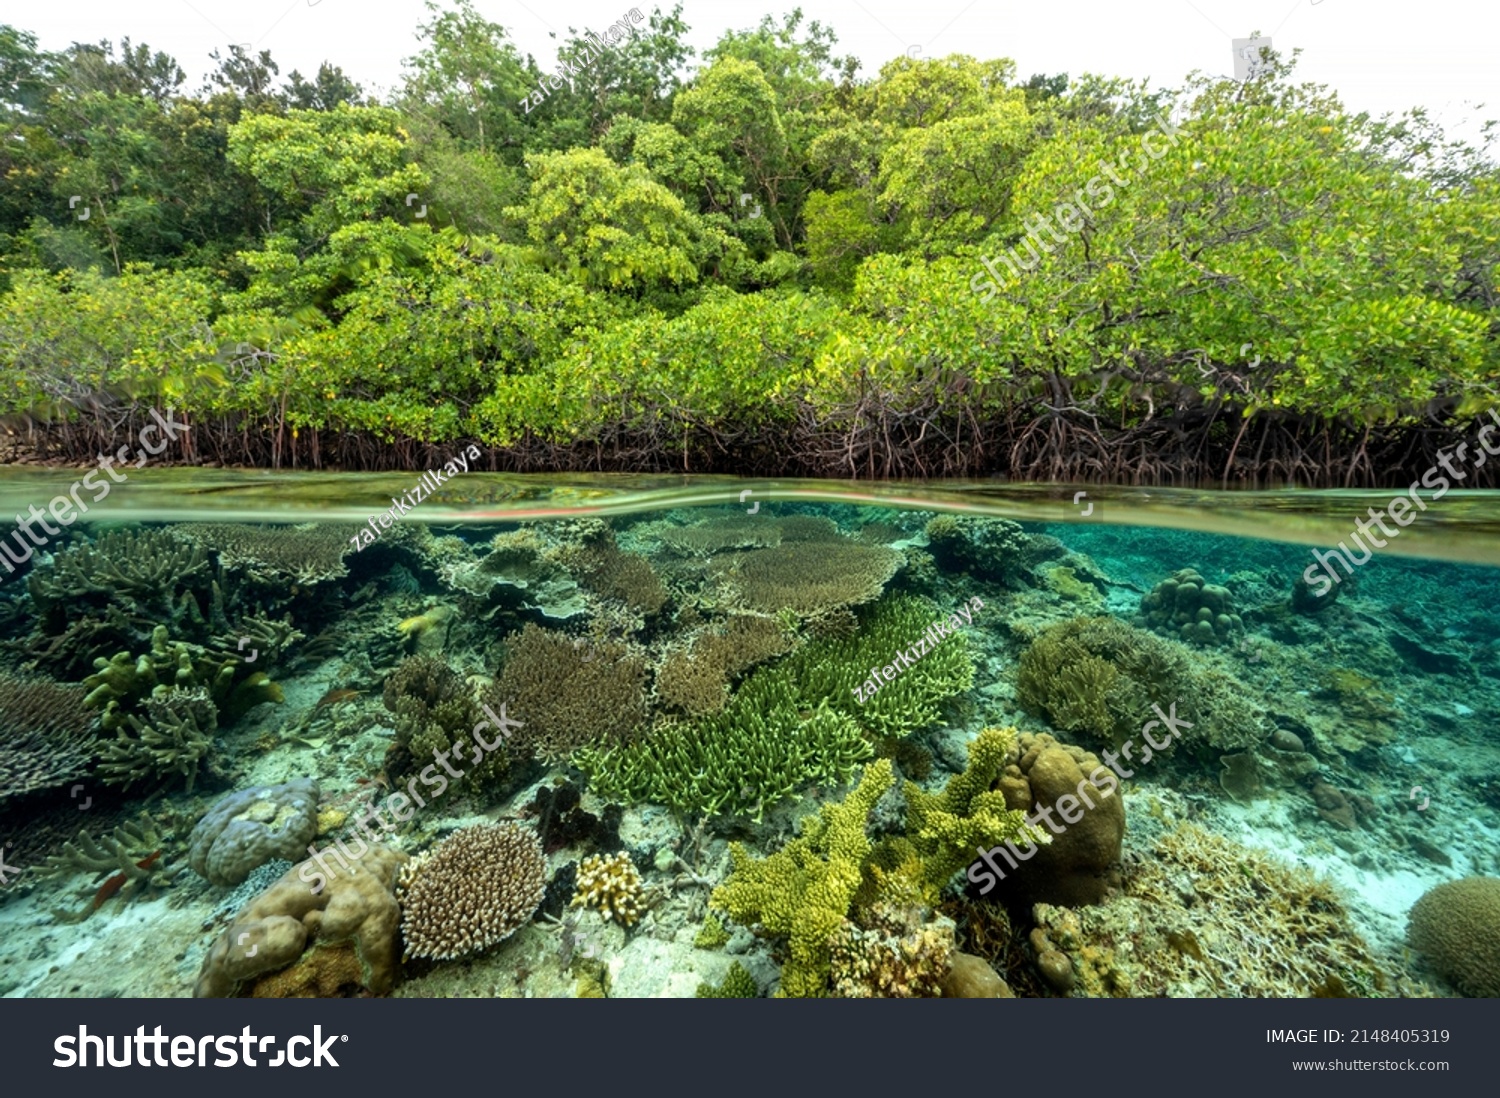 Mangrove forest and coral reefs in split shot, Gam Island Raja Ampat Indnonesia. #2148405319